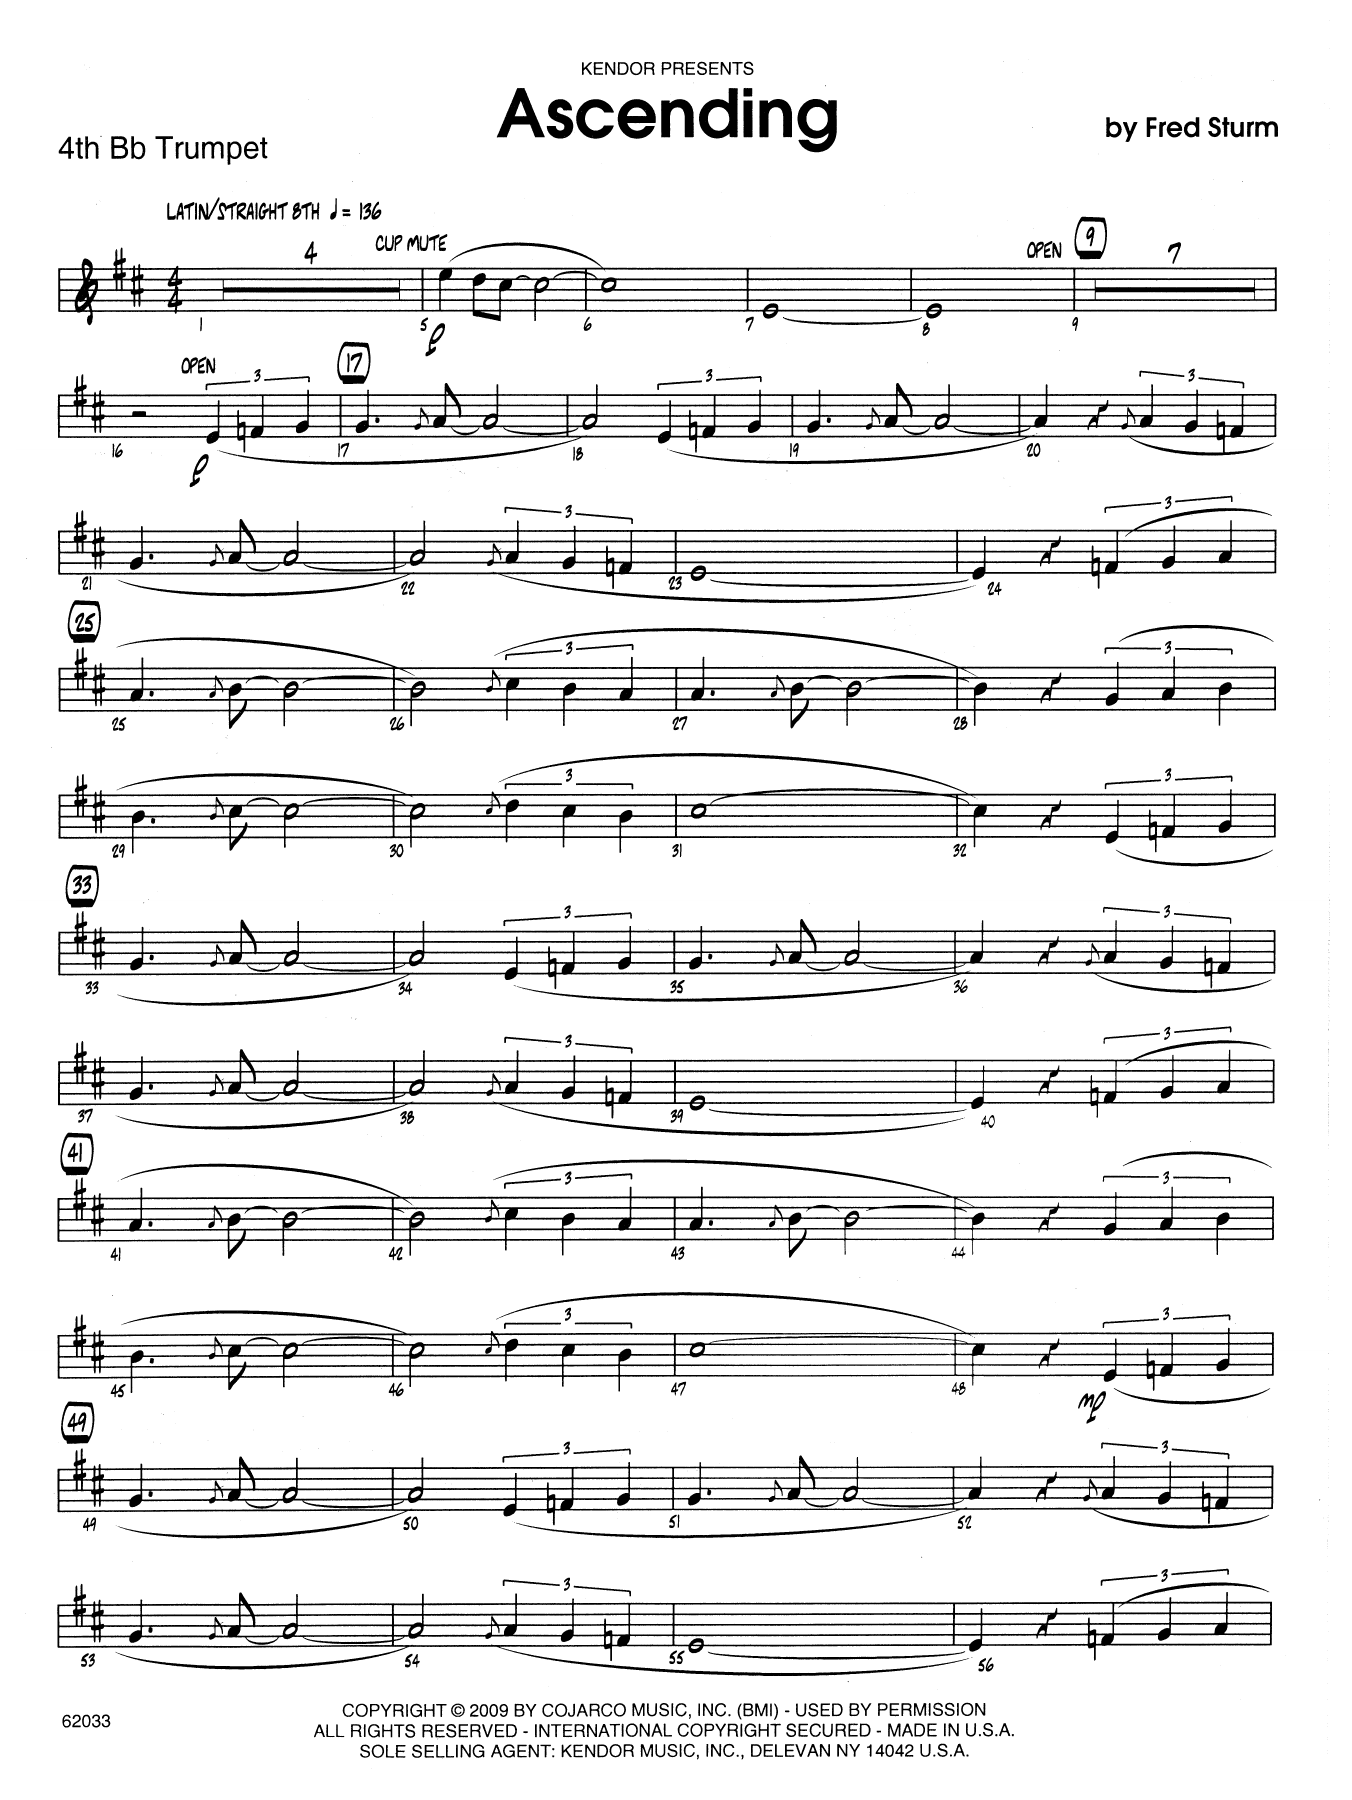 Download Fred Sturm Ascending - 4th Bb Trumpet Sheet Music